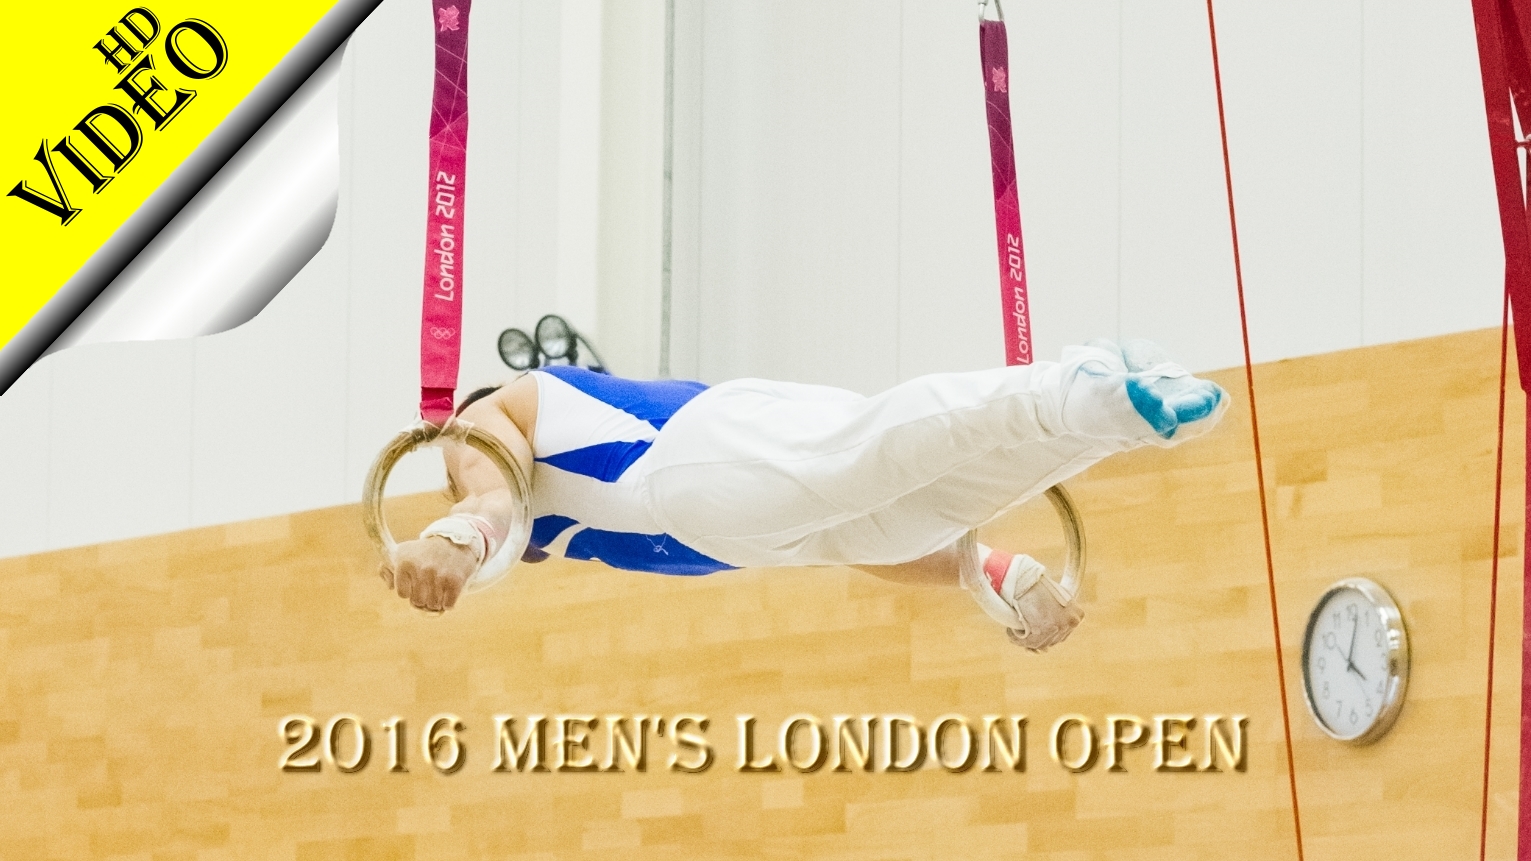 Kolimechkov at the 2016 London Open